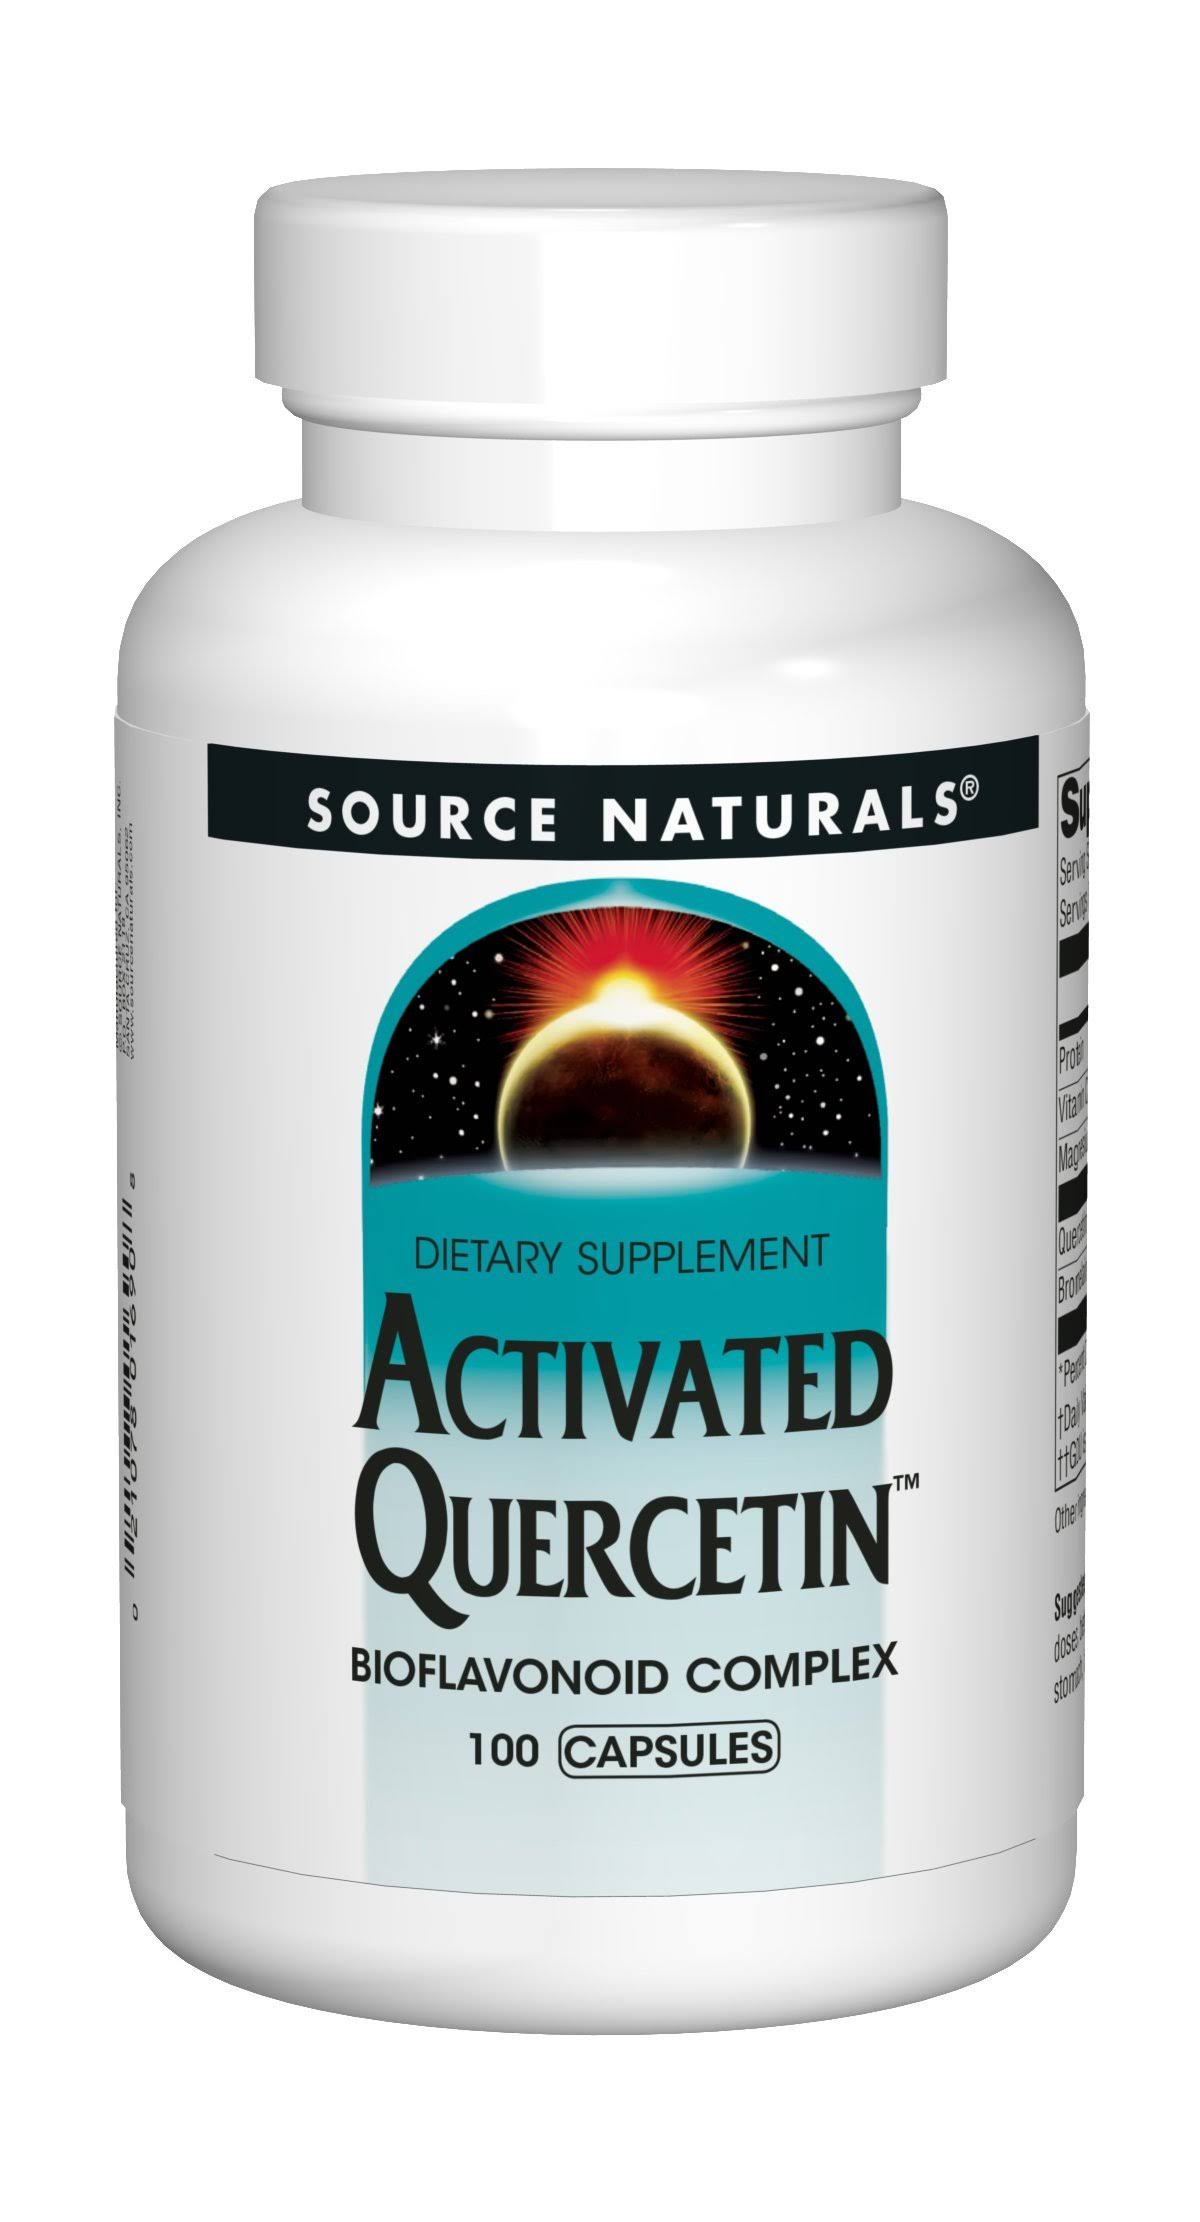 Source Naturals Activated Quercetin Supplement - 400 Capsules